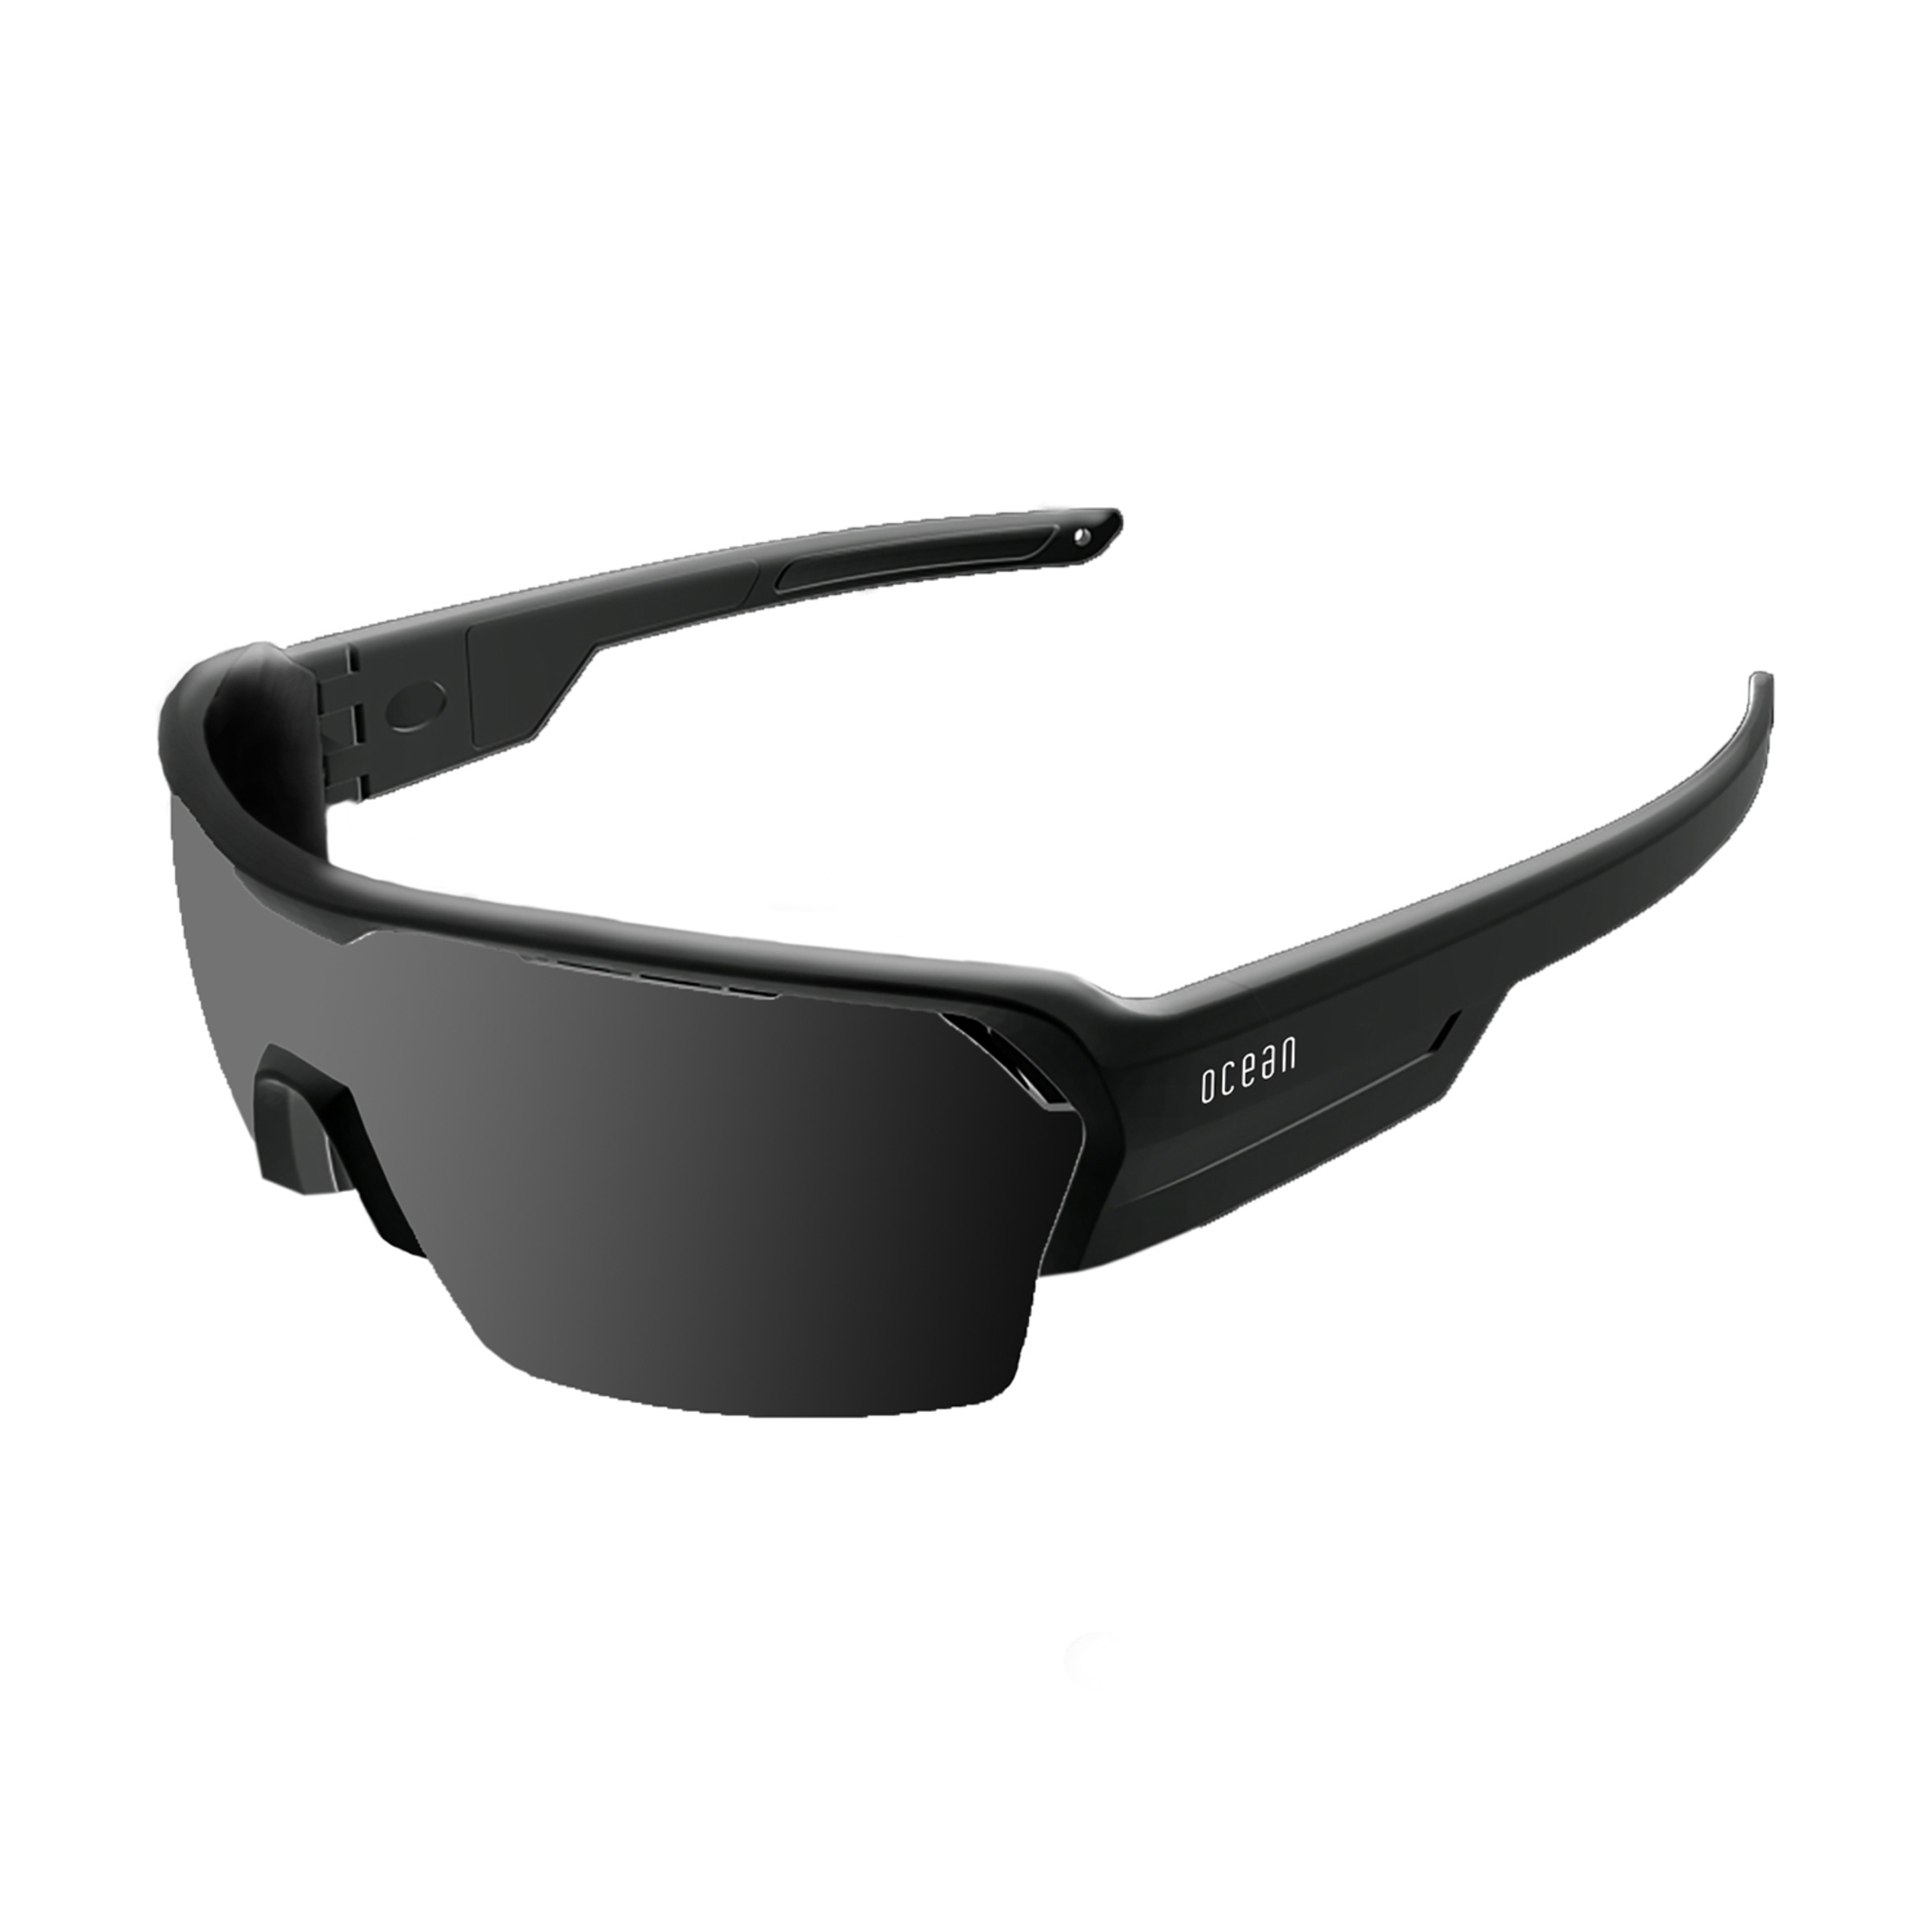 Gafas De Sol Técnicas Para La Práctica De Deportes De Agua Race Ocean Sunglasses